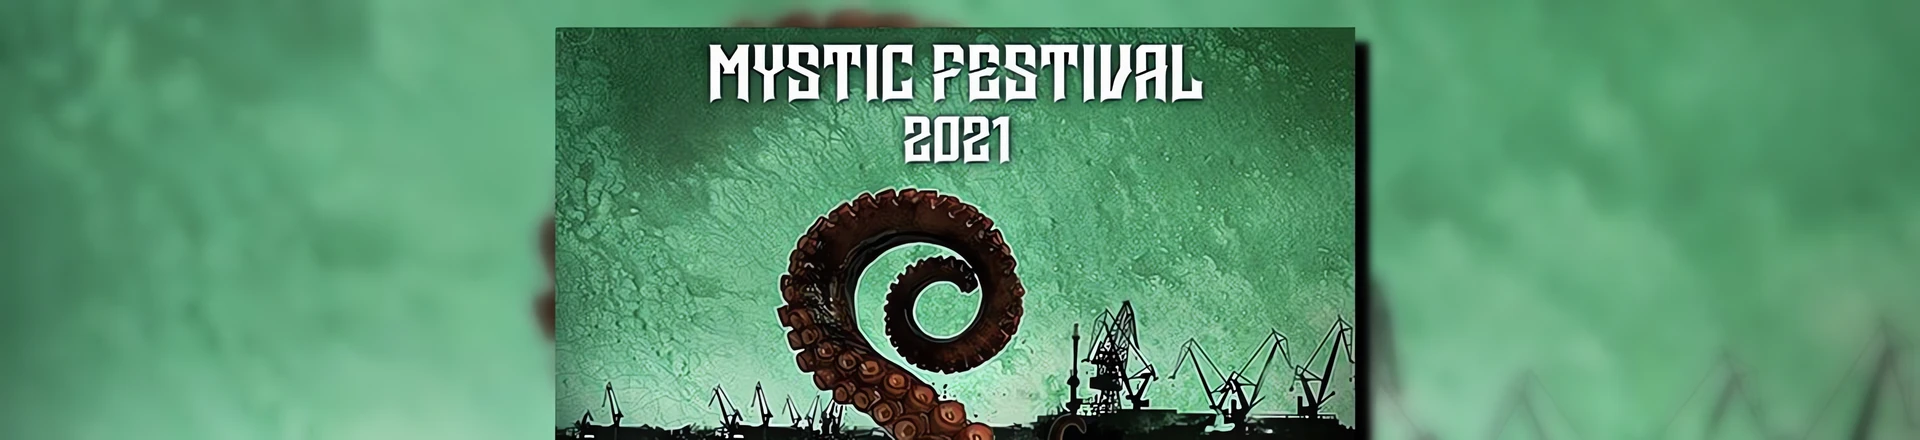 Mystic Festival 2021: Znamy kolejne 12 nazw